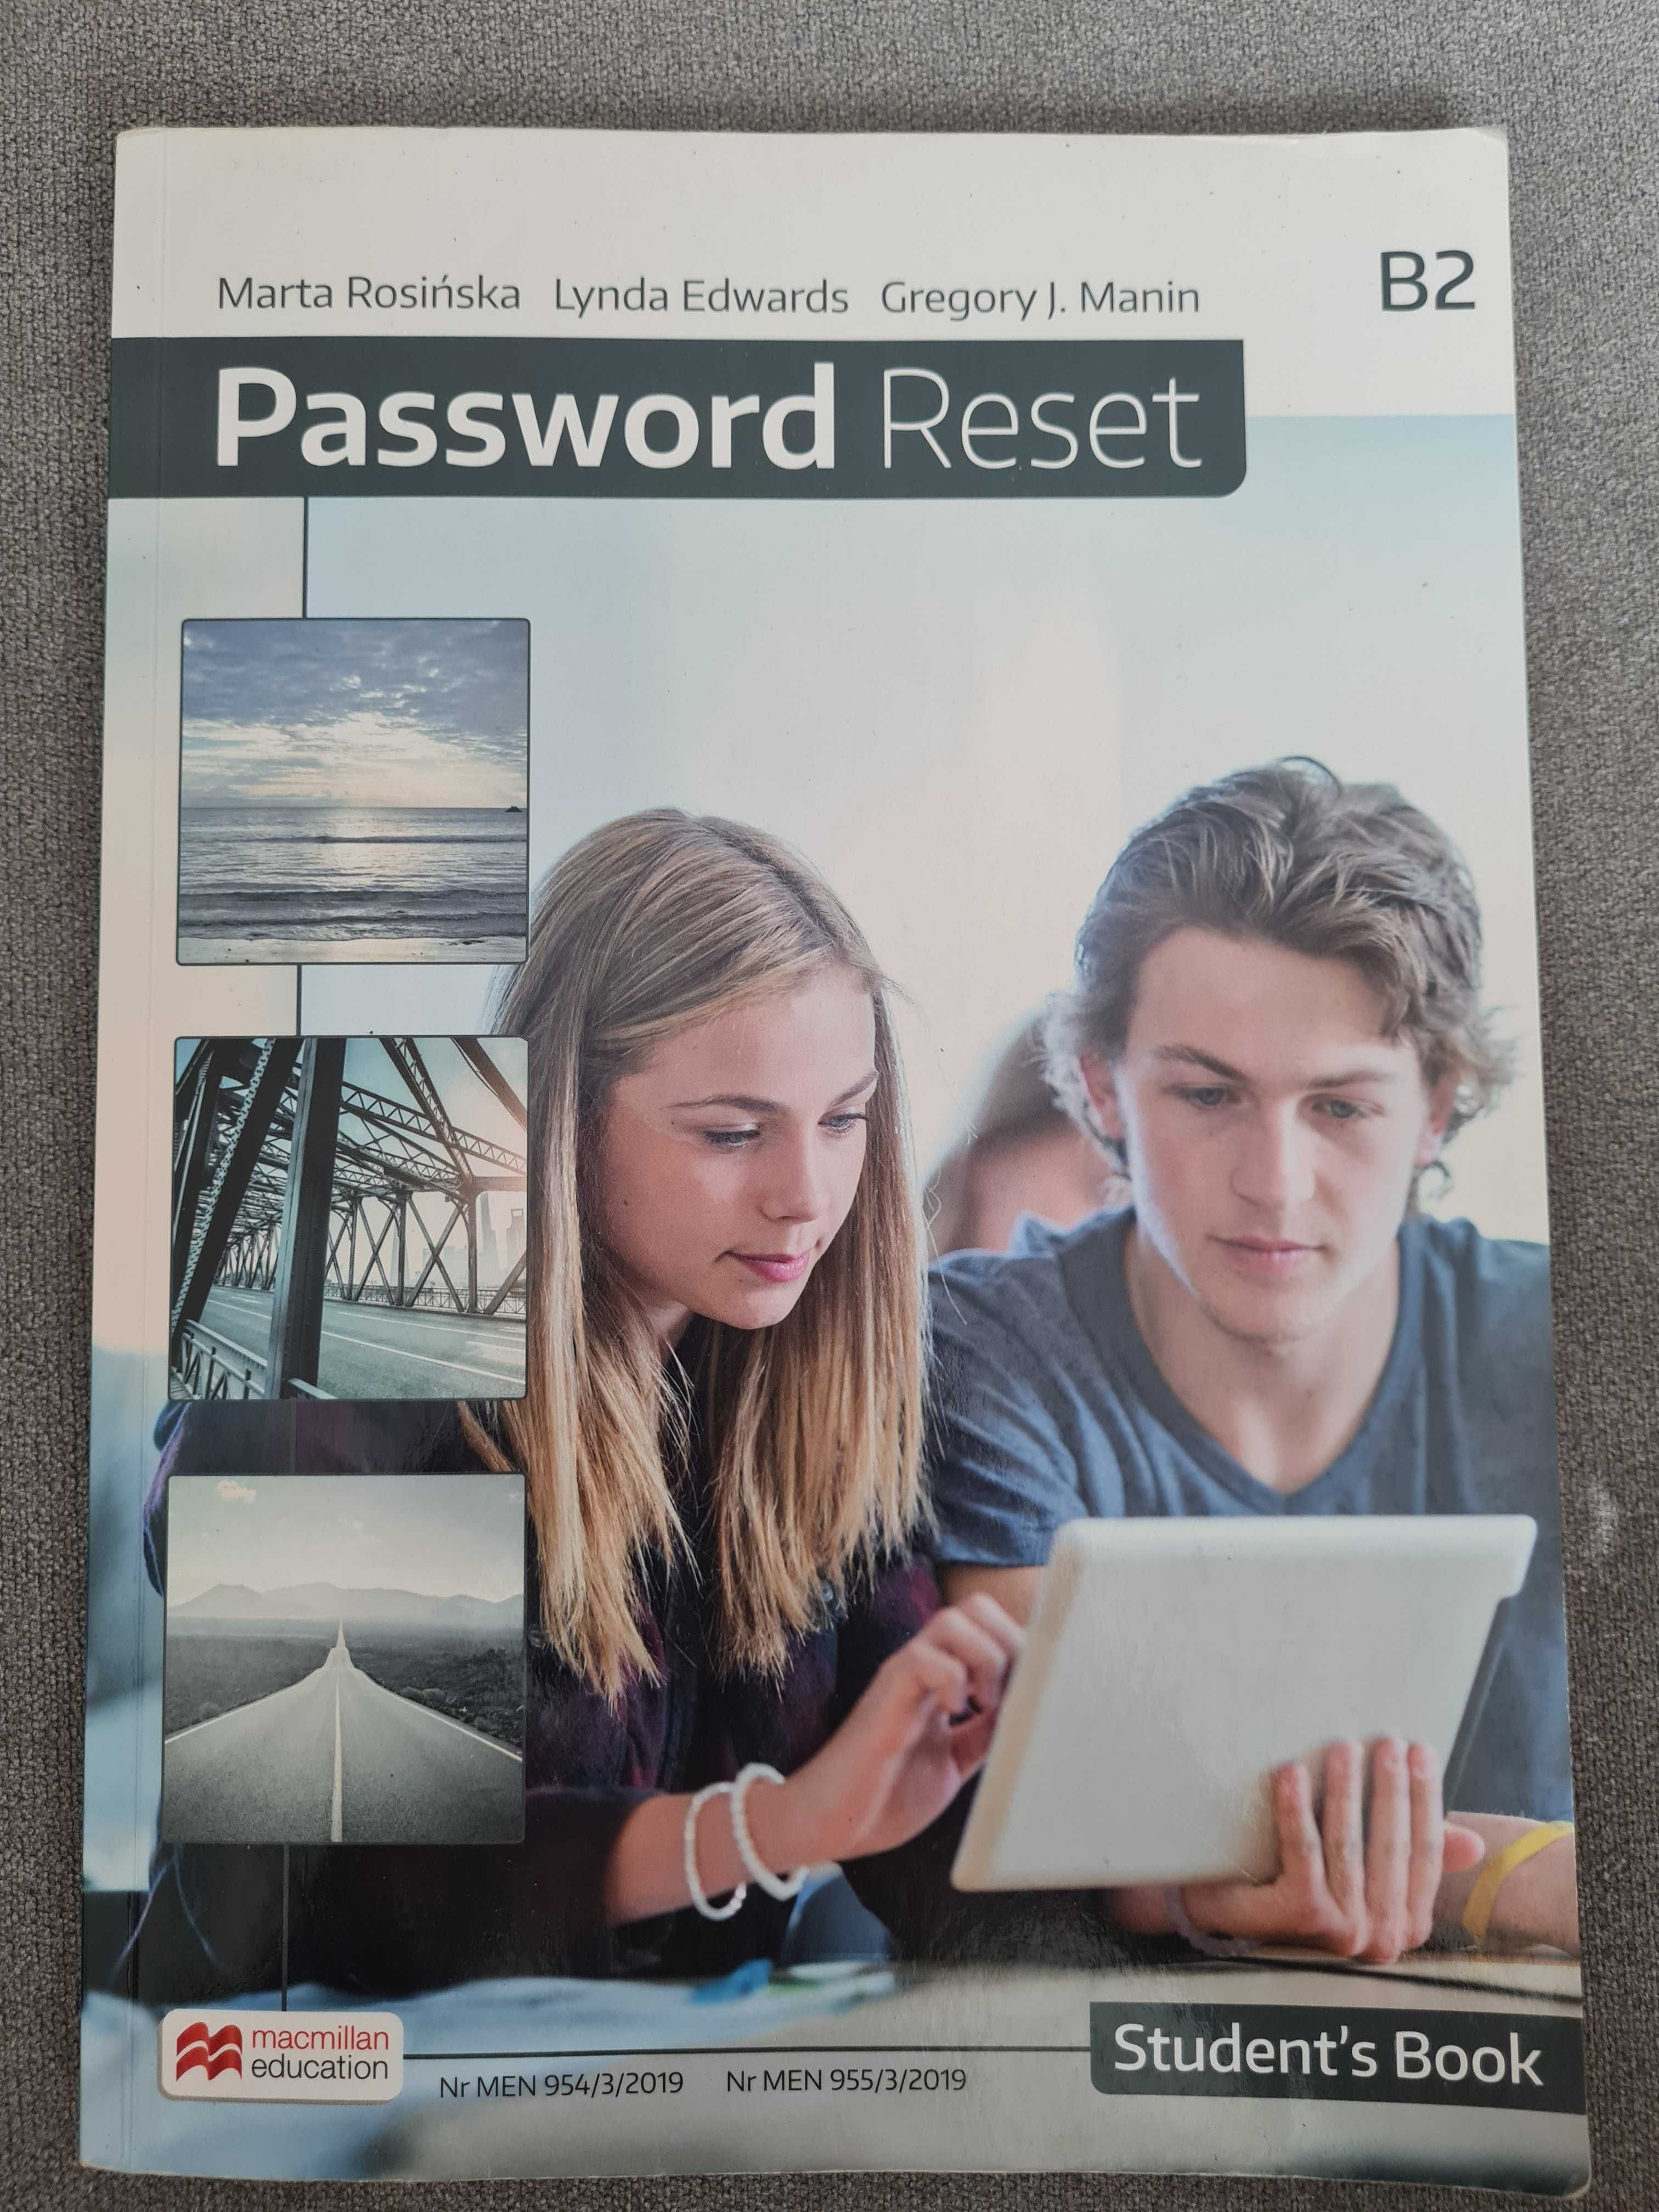 Passwor reset B2, Student's Book